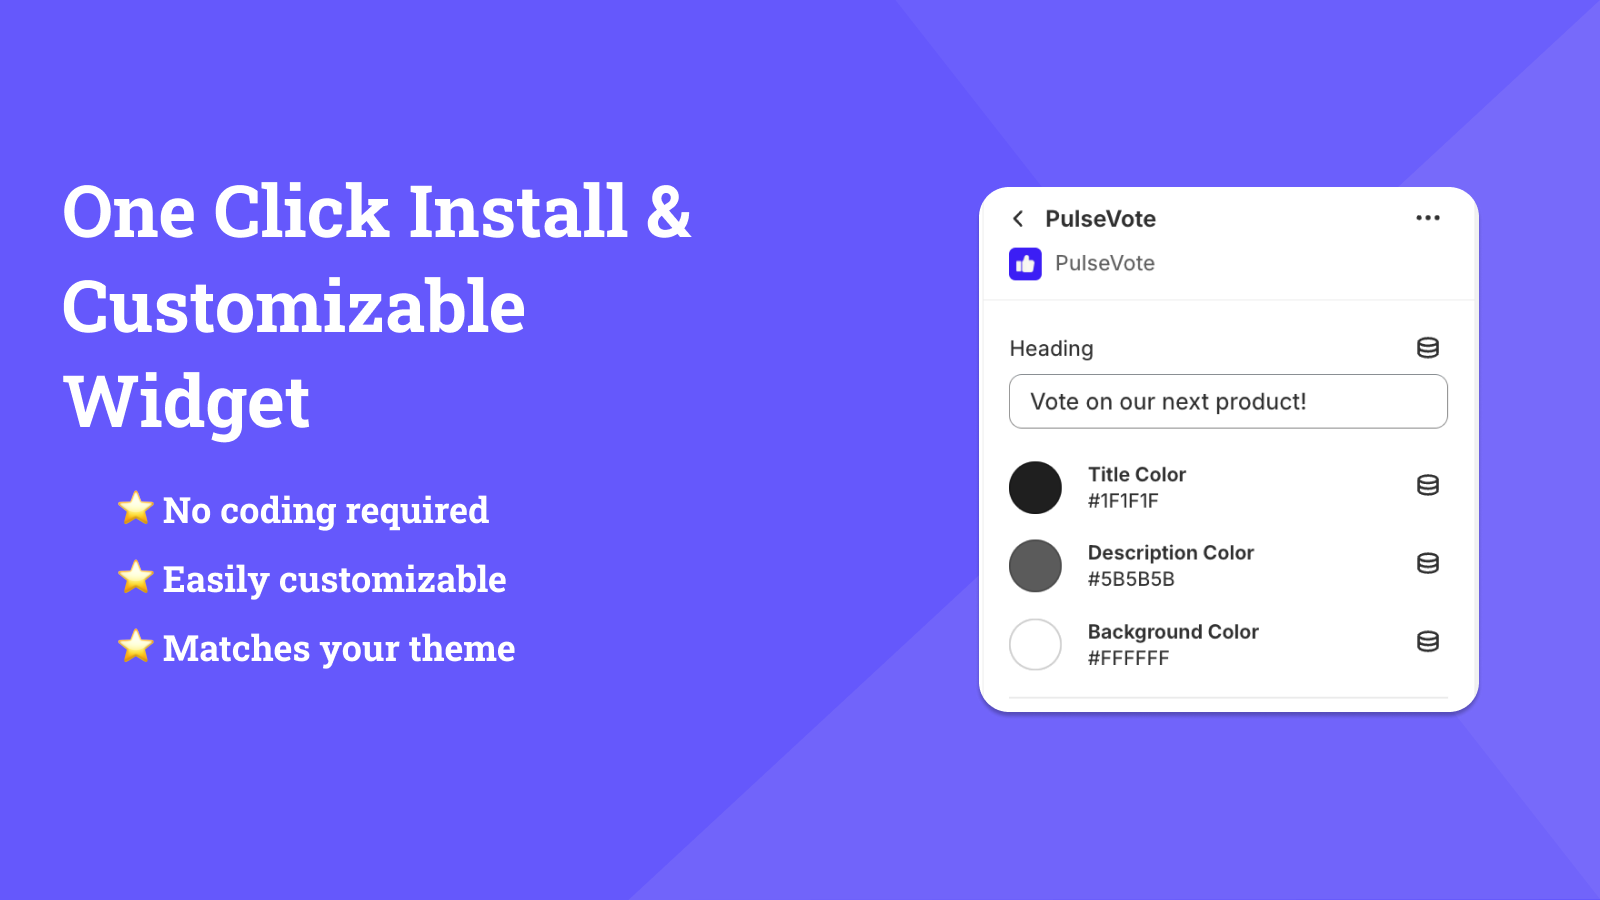 One click install & customizable widget